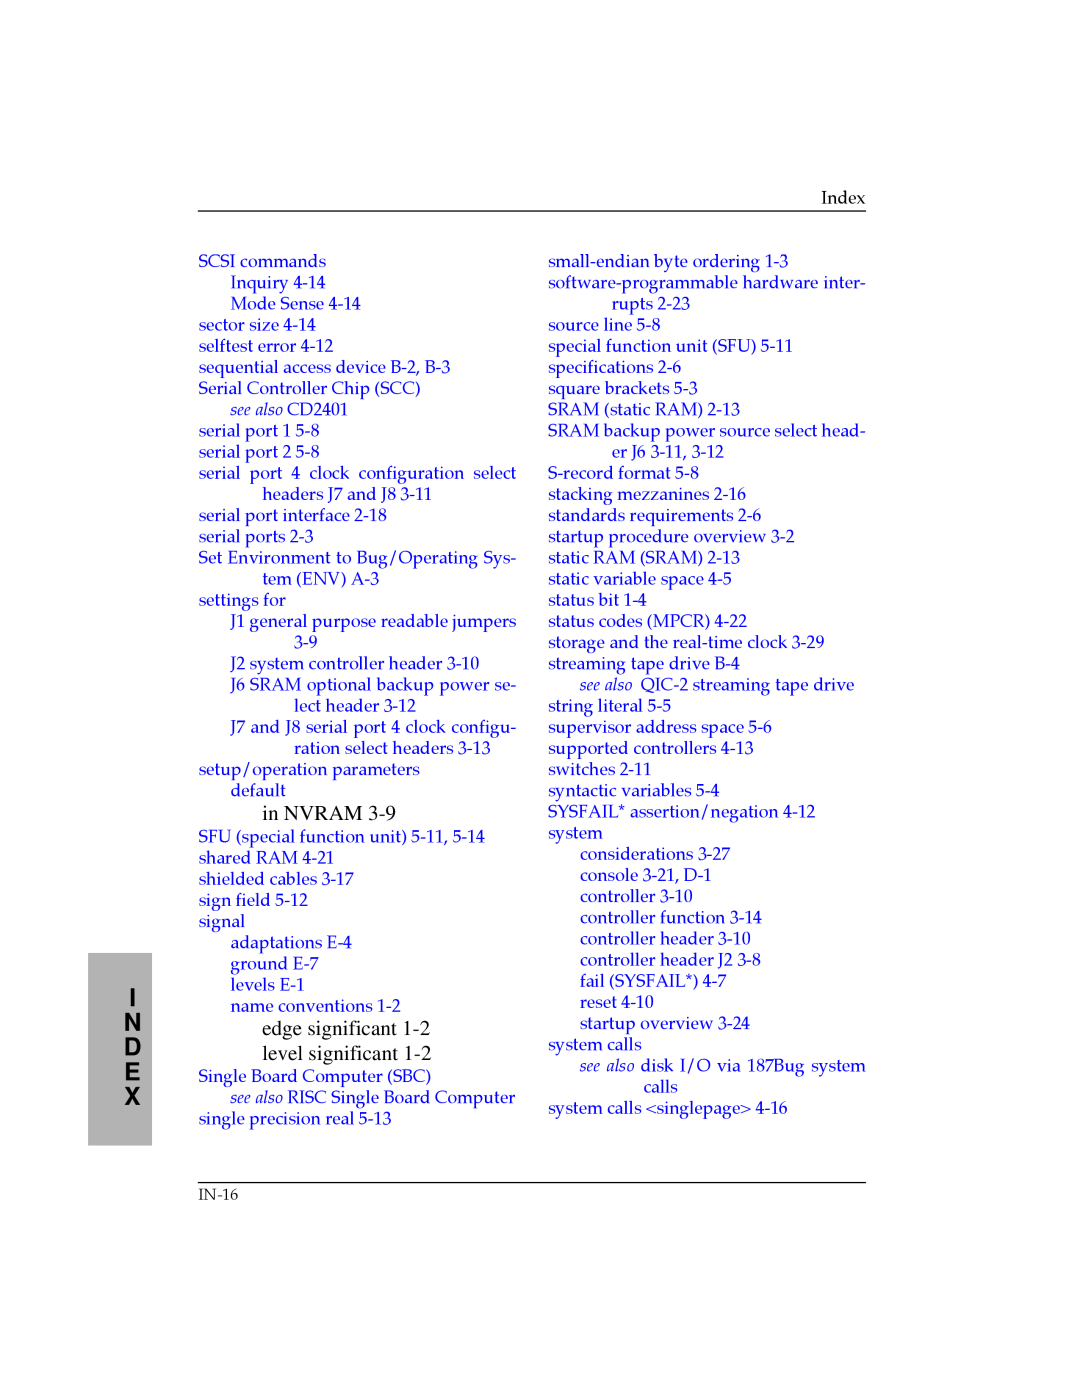 Motorola MVME187 manual in NVRAM, edge significant 1-2 level significant, I N D E 